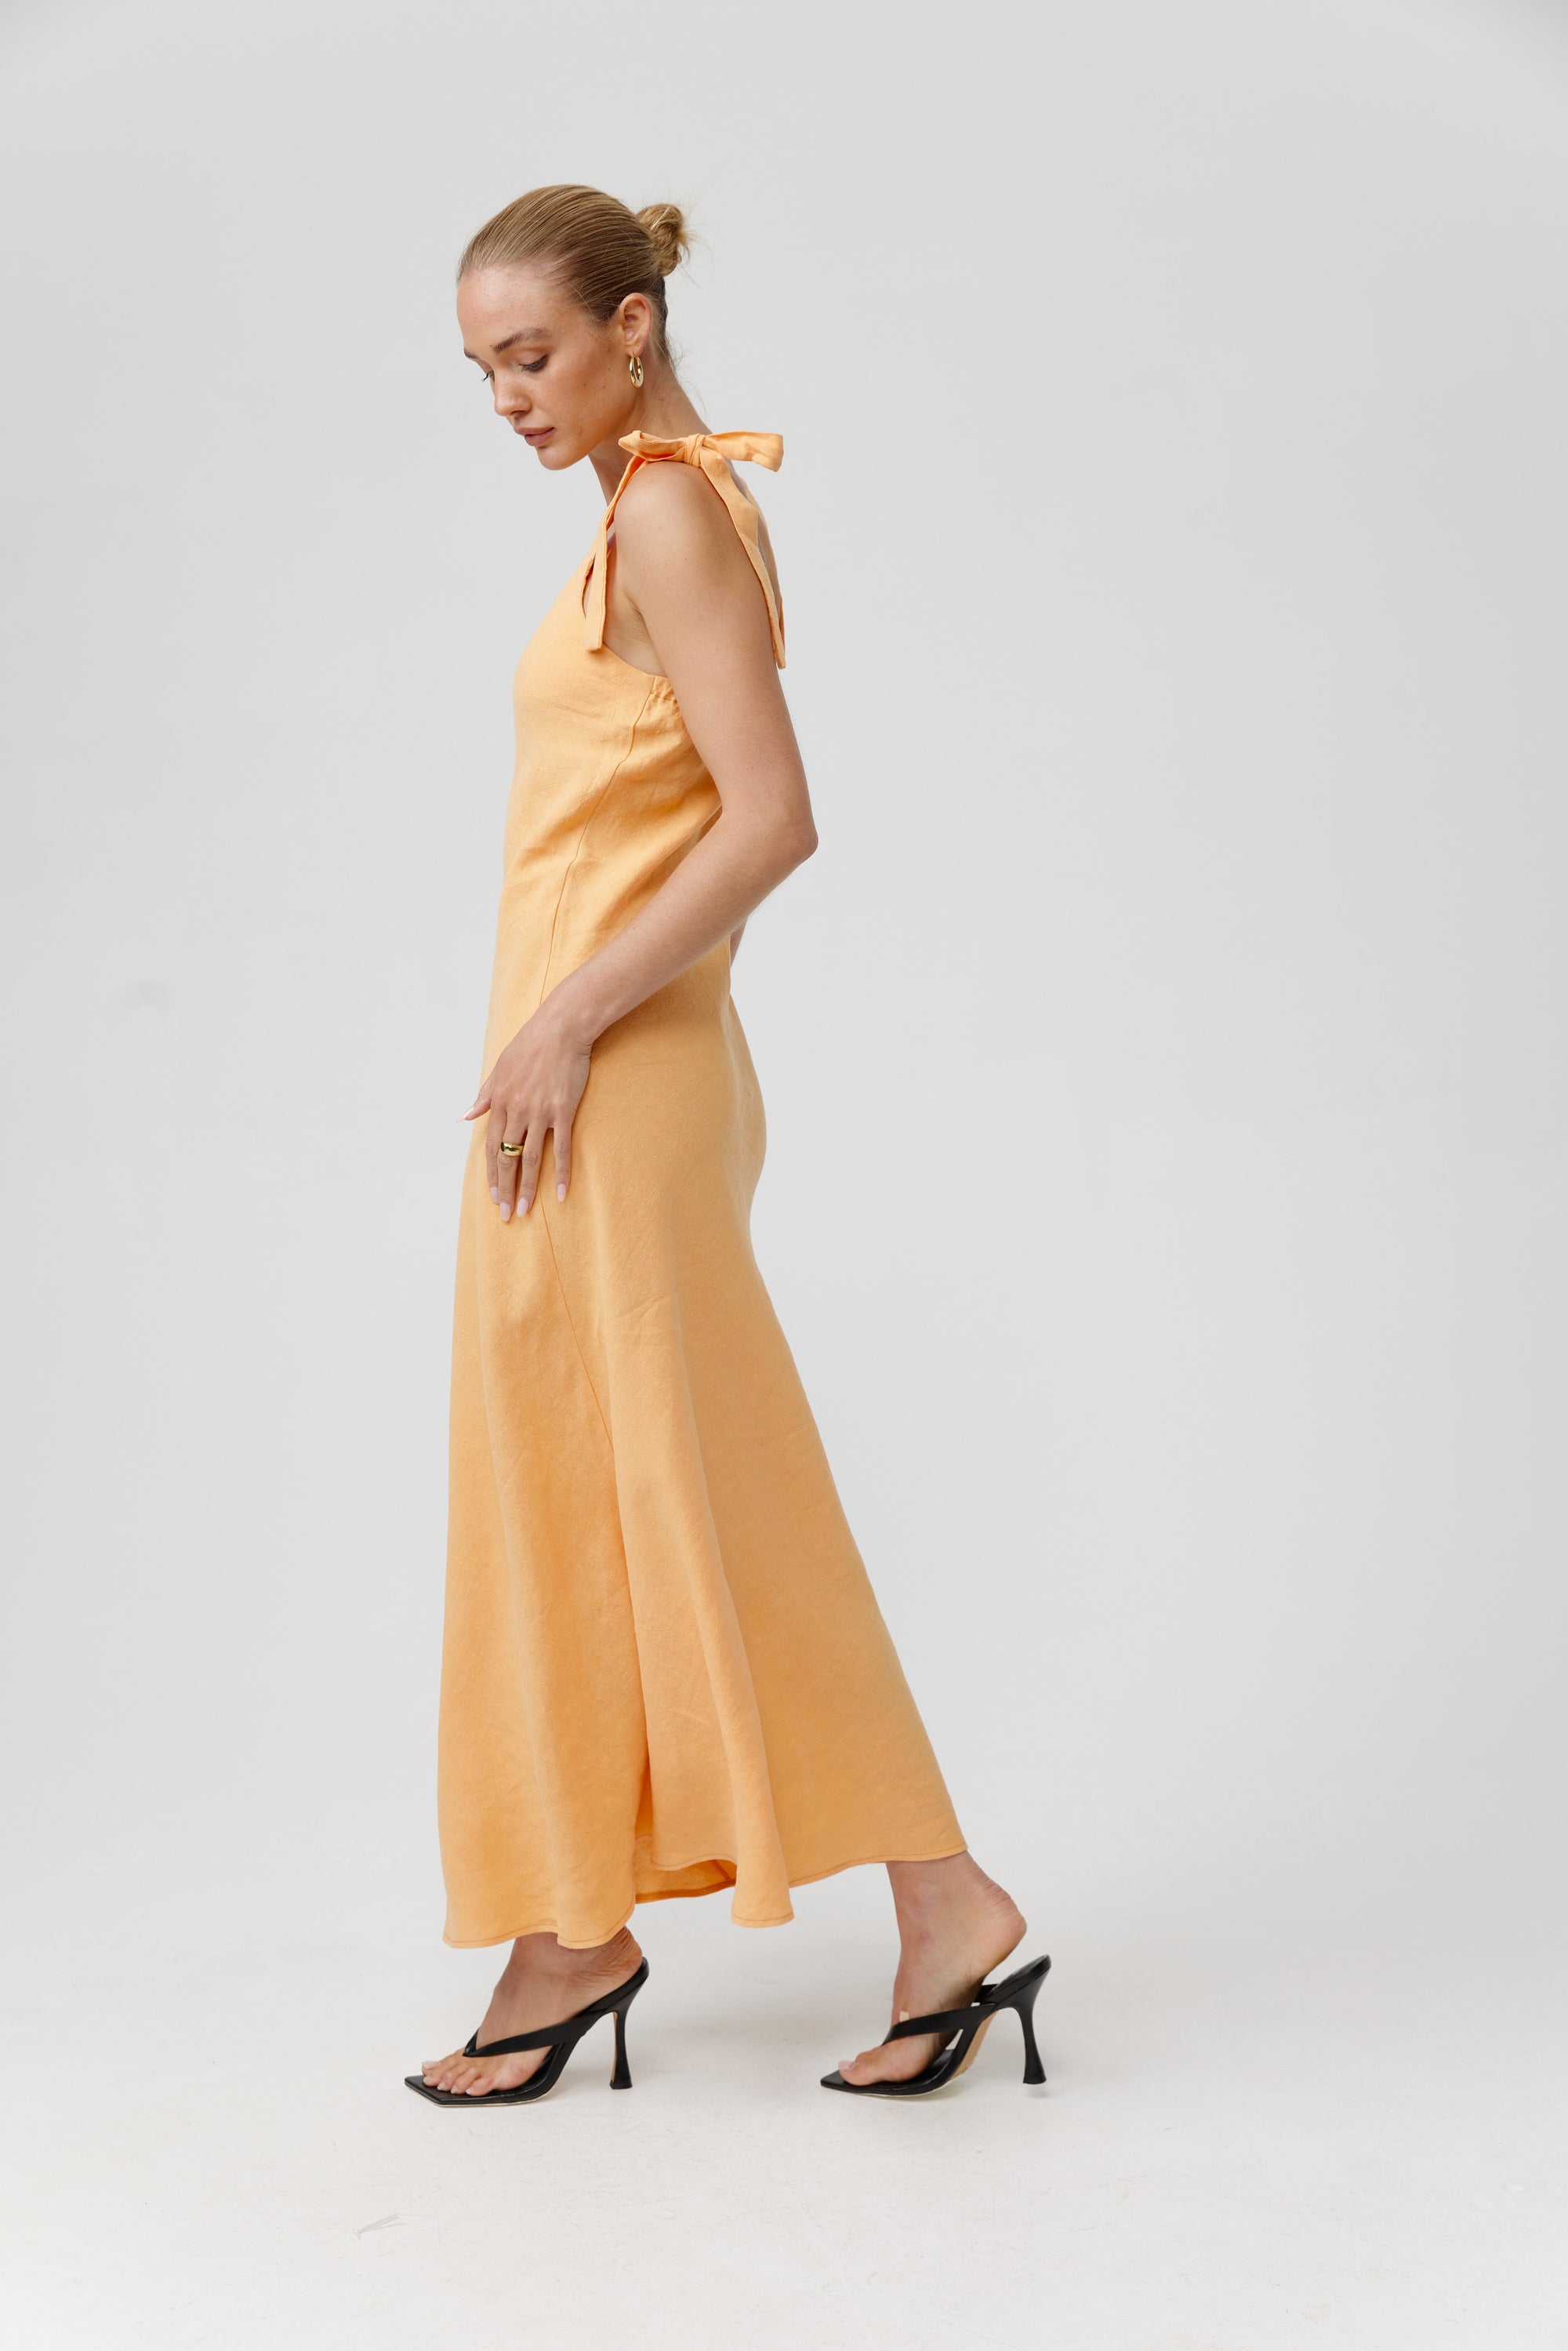 Kinney - Lola Tie Dress Apricot